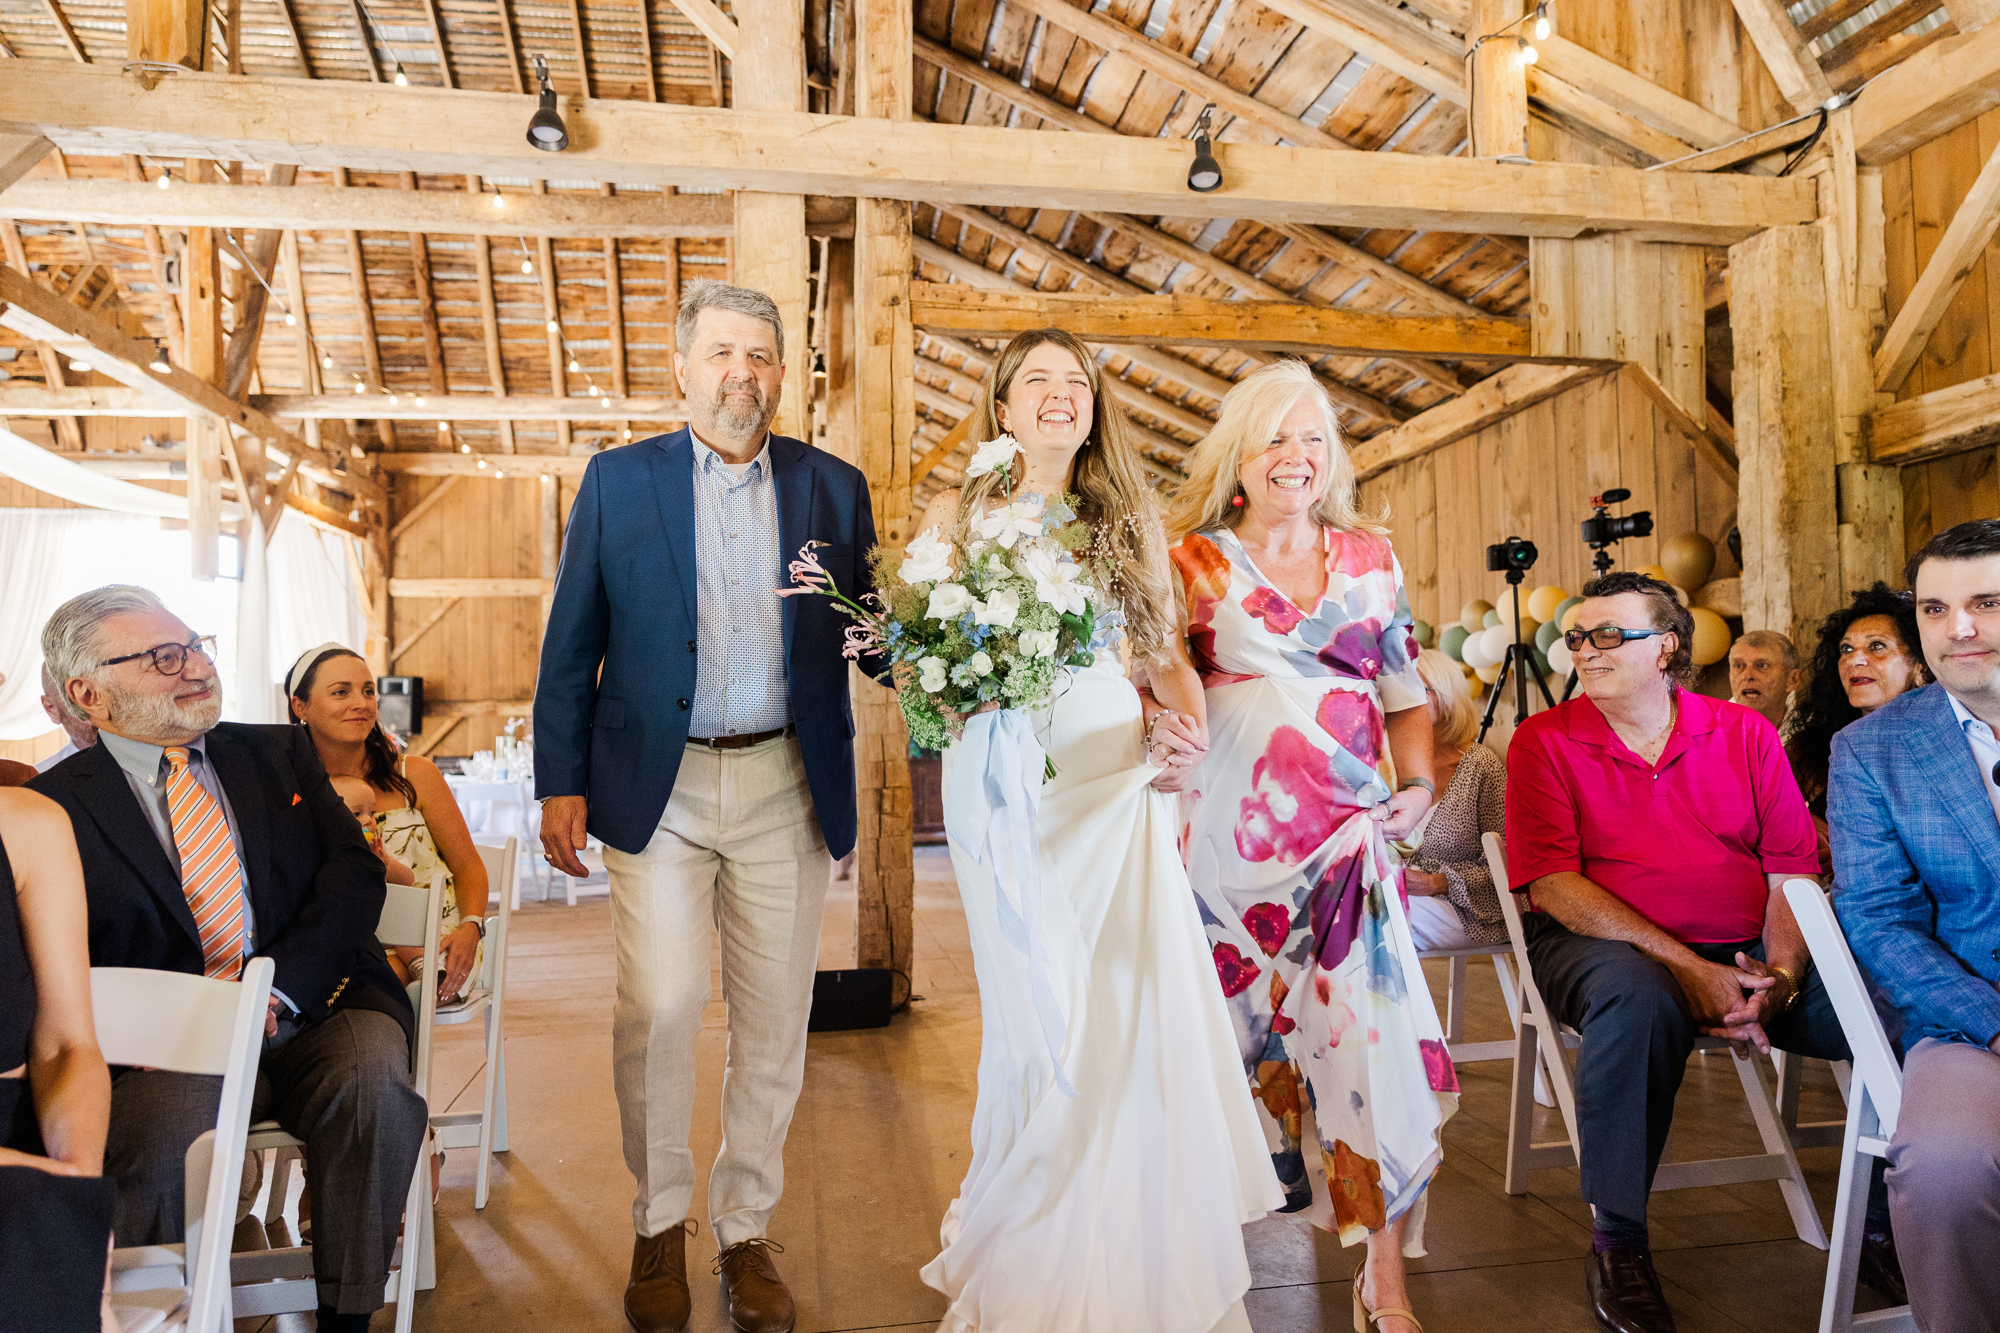 Vibrant Maple Meadows Farm Wedding in Ontario, Canada